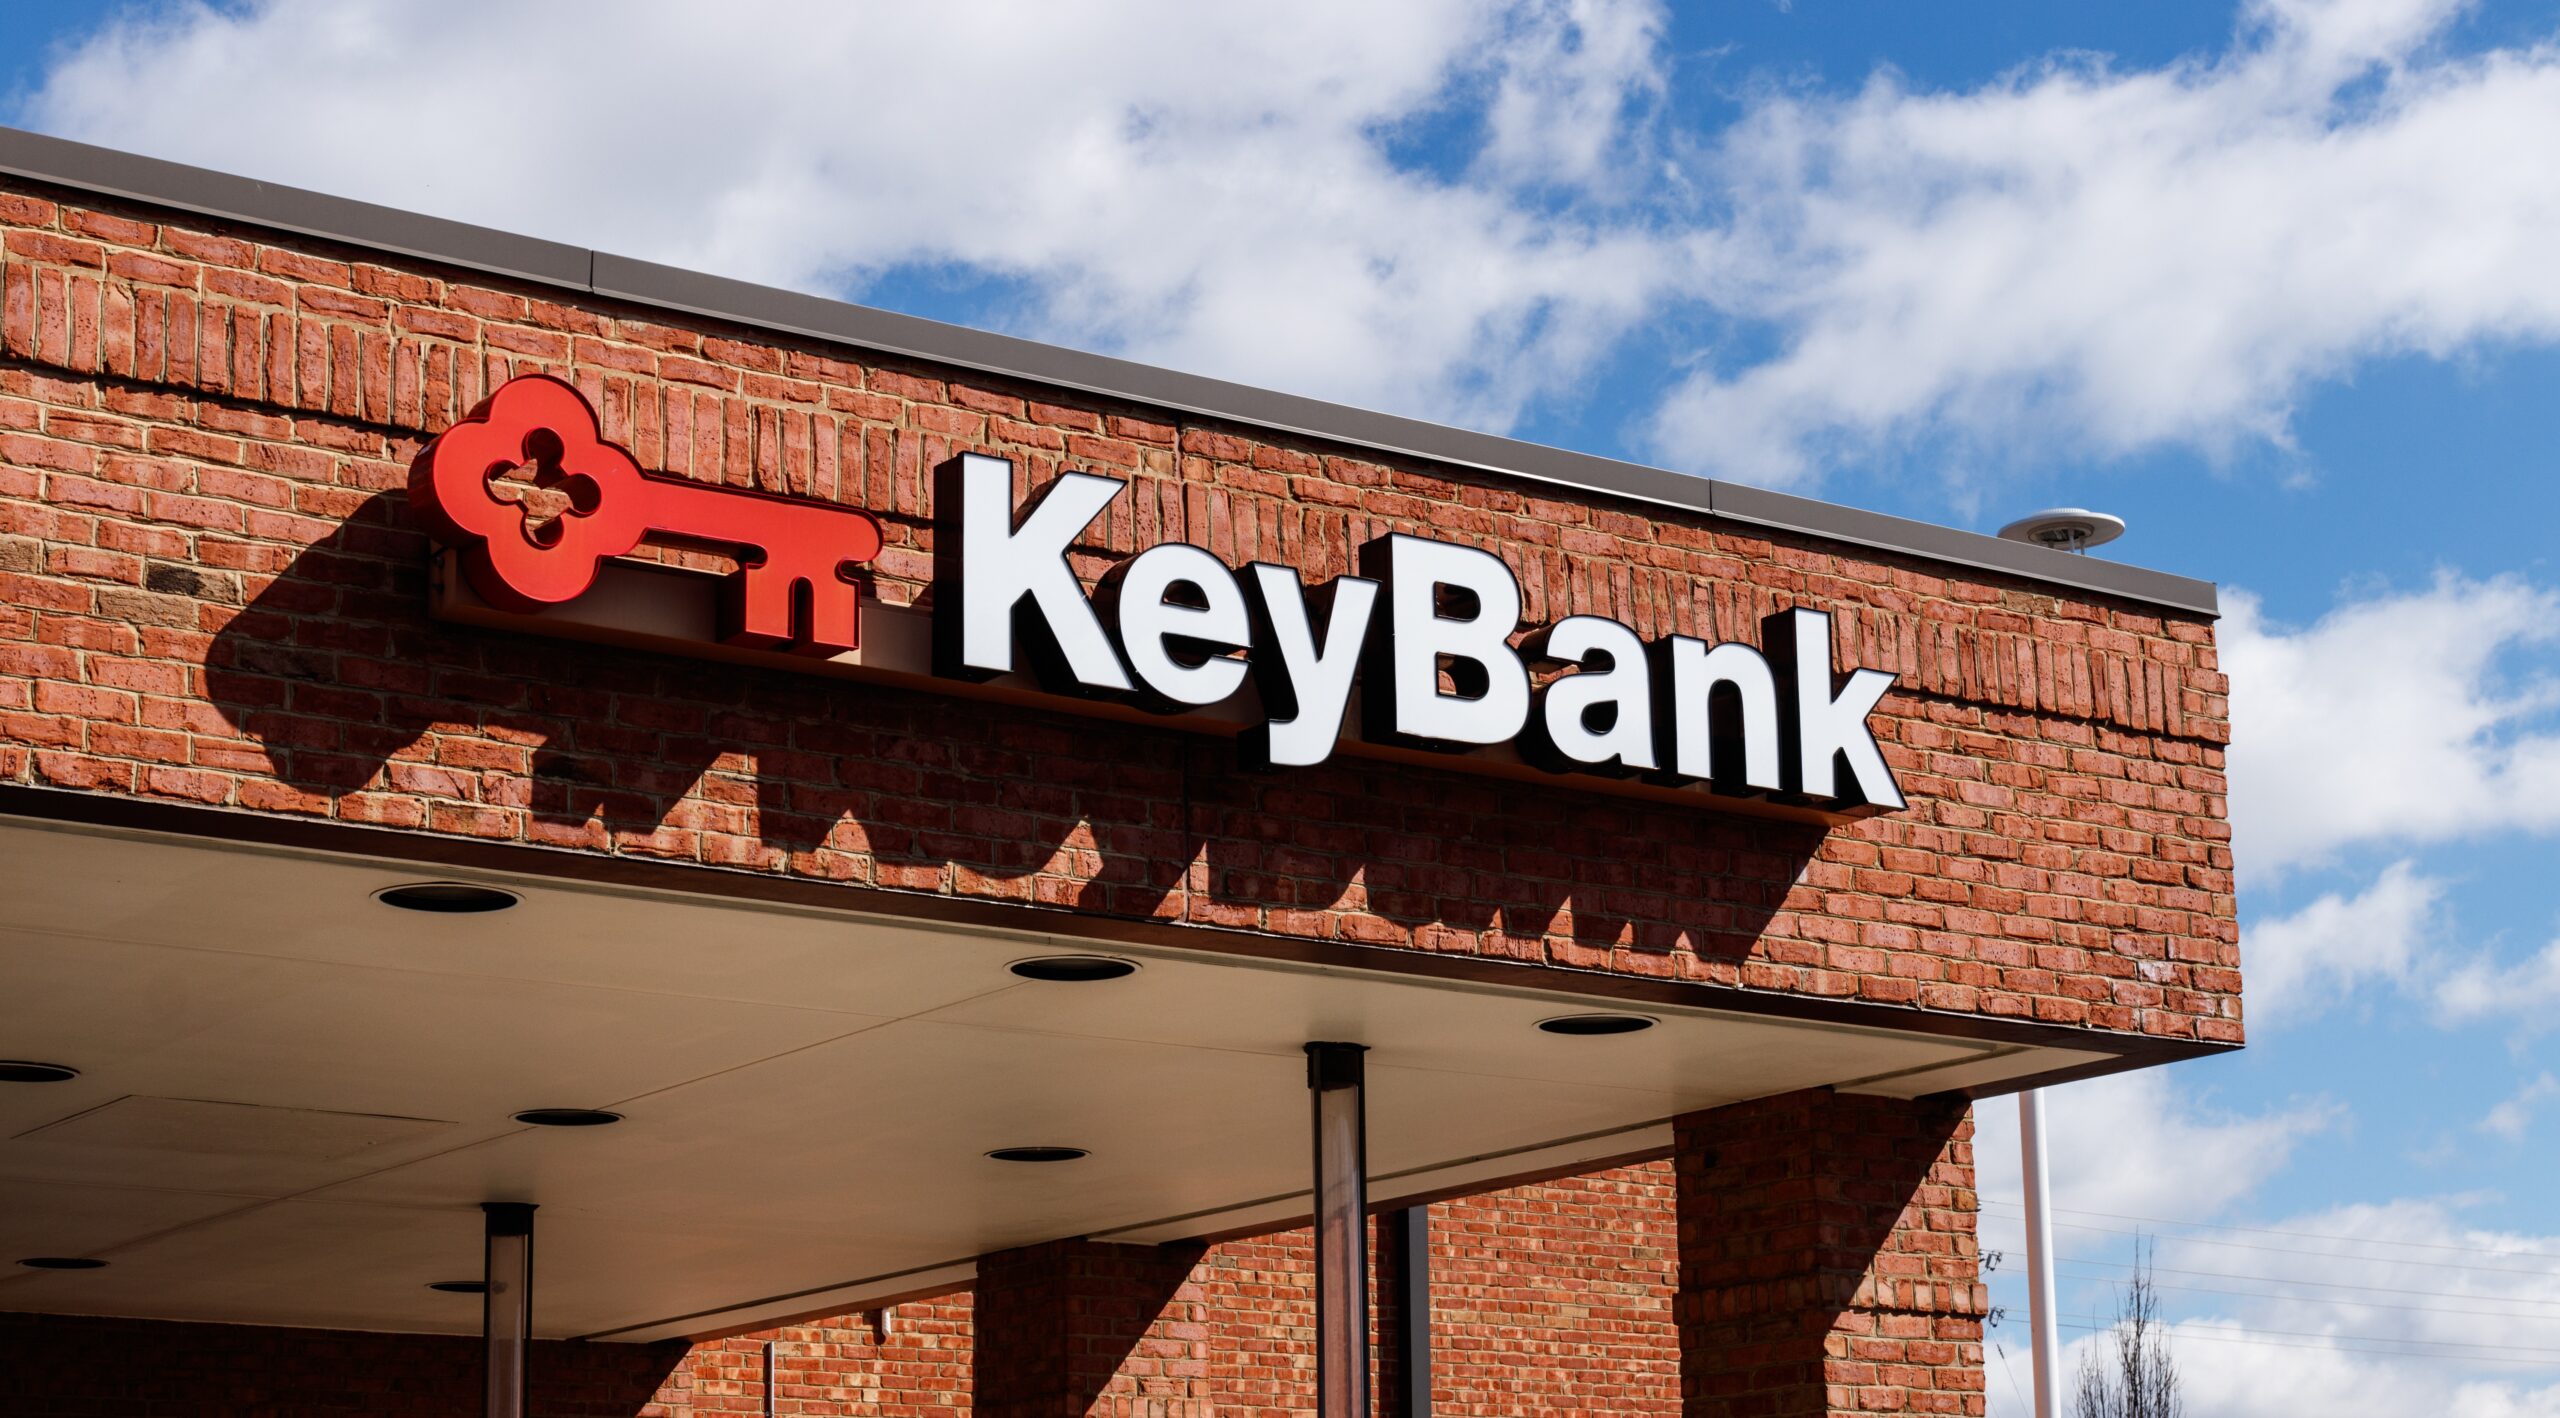 KeyBank branch exterior